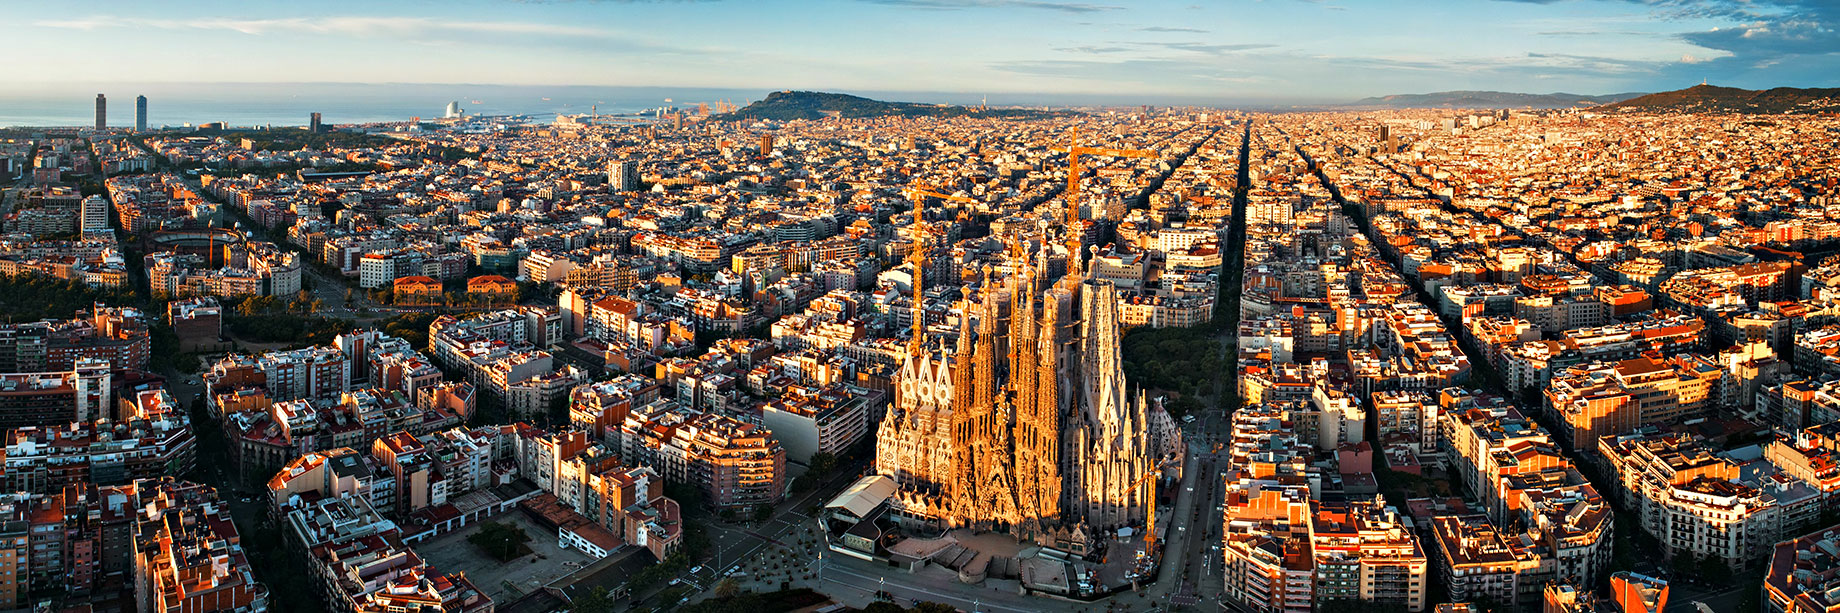 Aerial View of Sagrada Familia - Barcelona, Catalonia, Spain